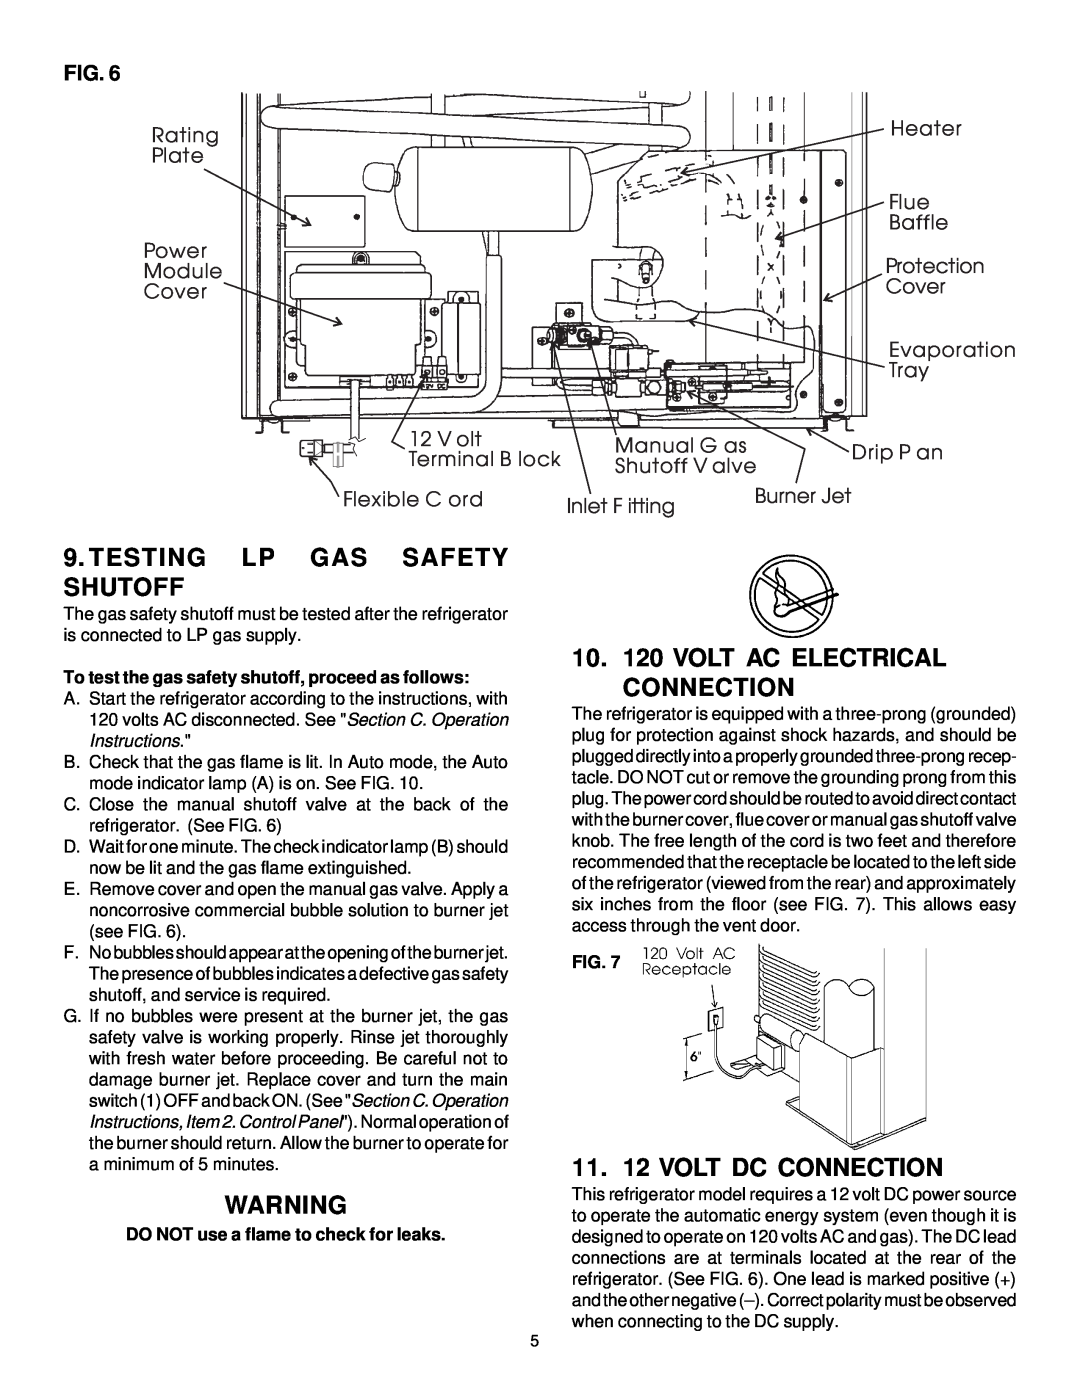 Dometic RM2812, RM2612 Testing Lp Gas Safety Shutoff, 10. 120 VOLT AC ELECTRICAL CONNECTION, 11. 12 VOLT DC CONNECTION 